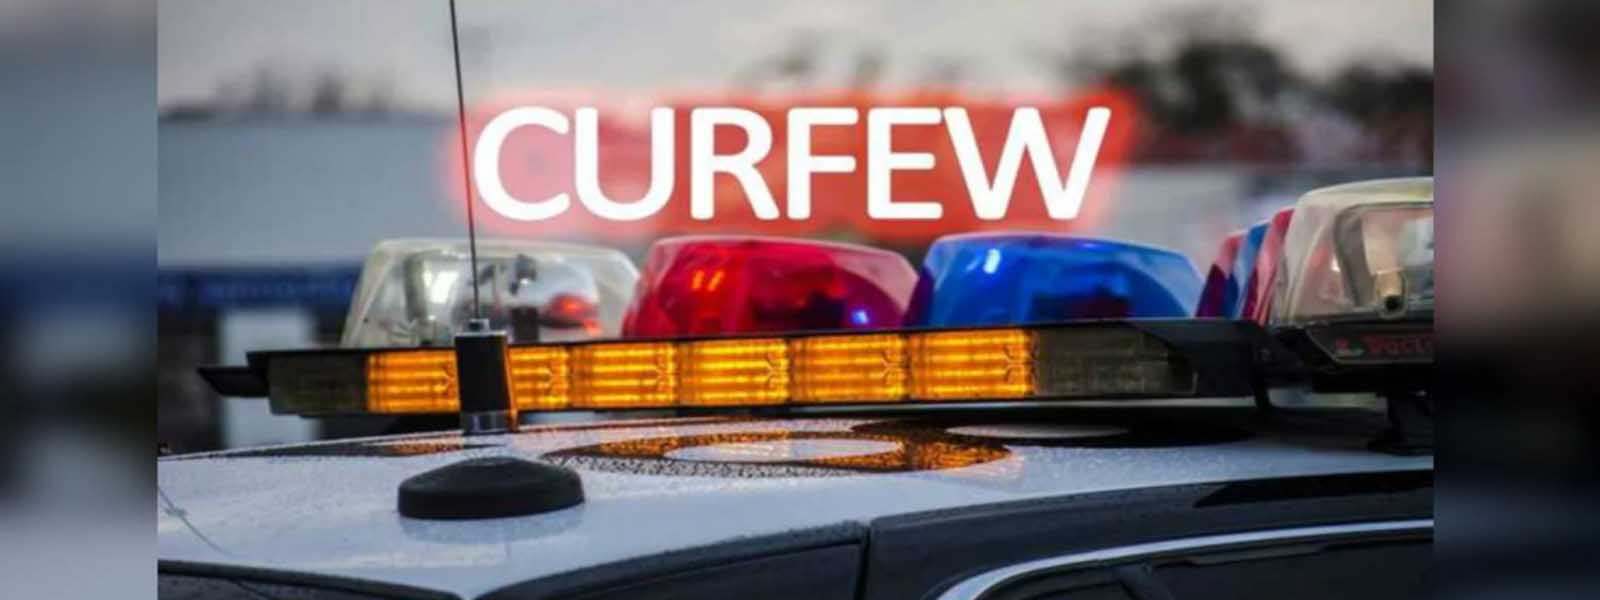 Curfew in Gothatuwa, Mulleriyawa from 7 pm today